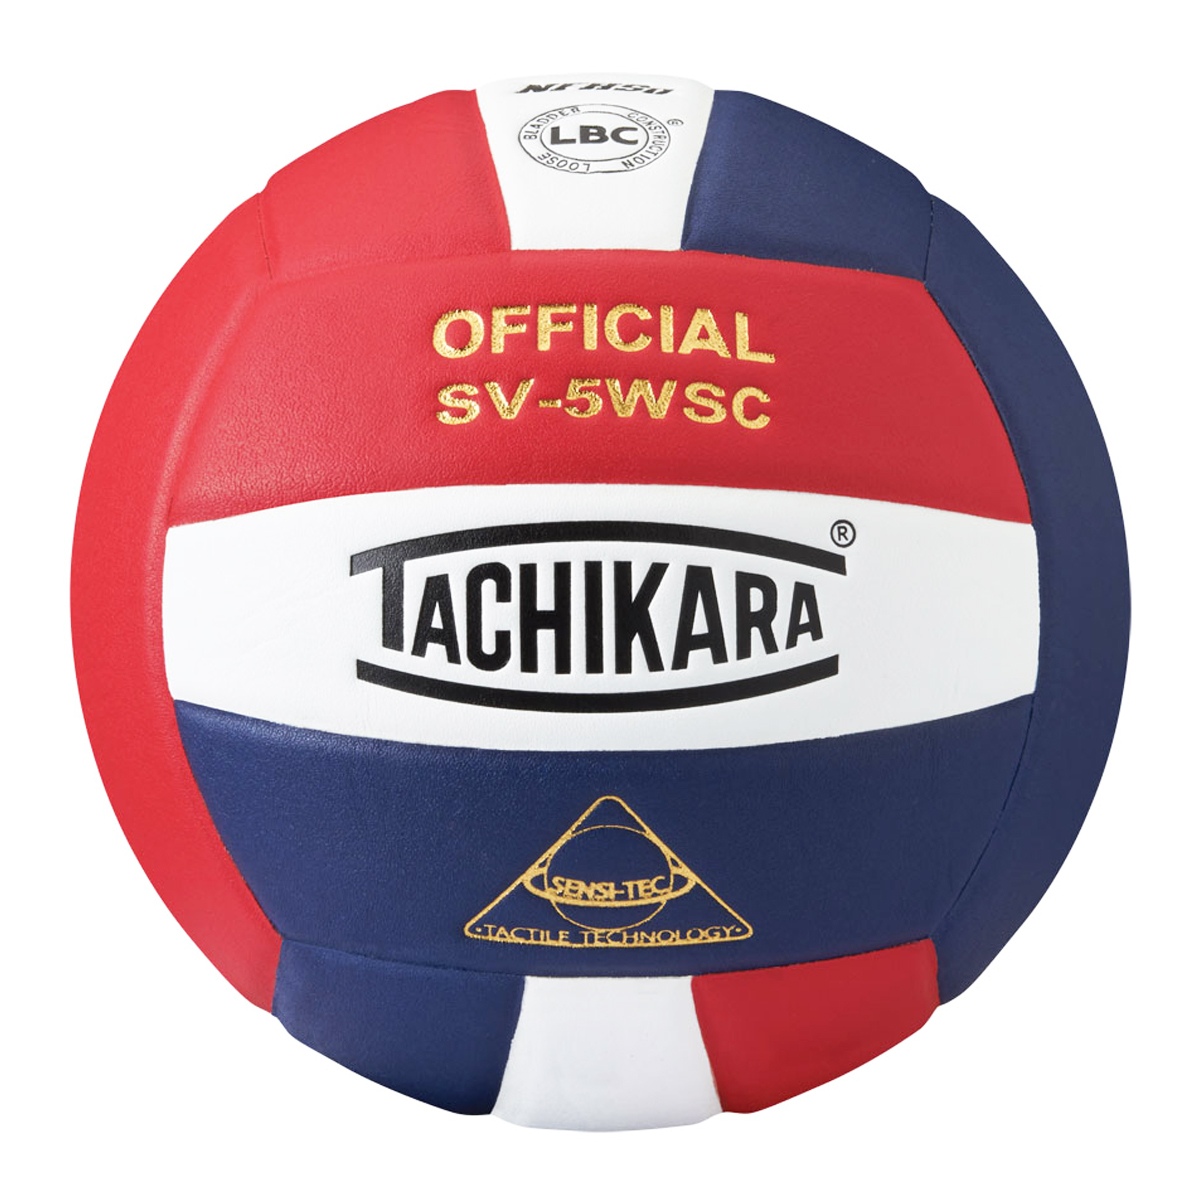 Tachikara SV5WSC Composite Volleyball-Scarlet, White, Navy